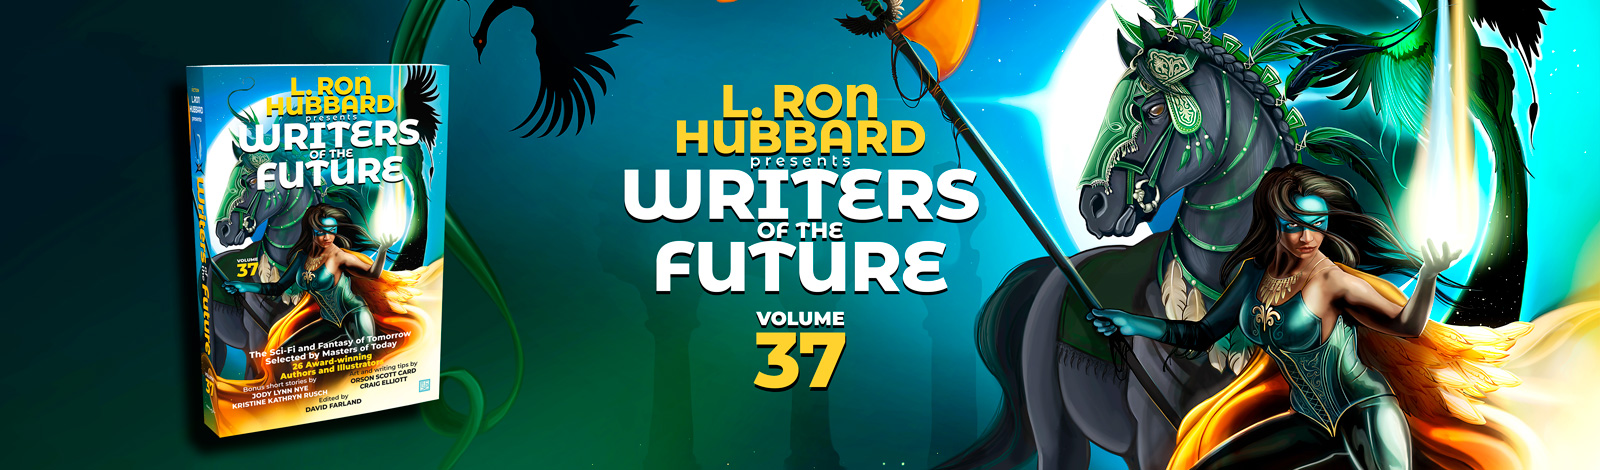 Writers of the Future Volume 37 eBundle